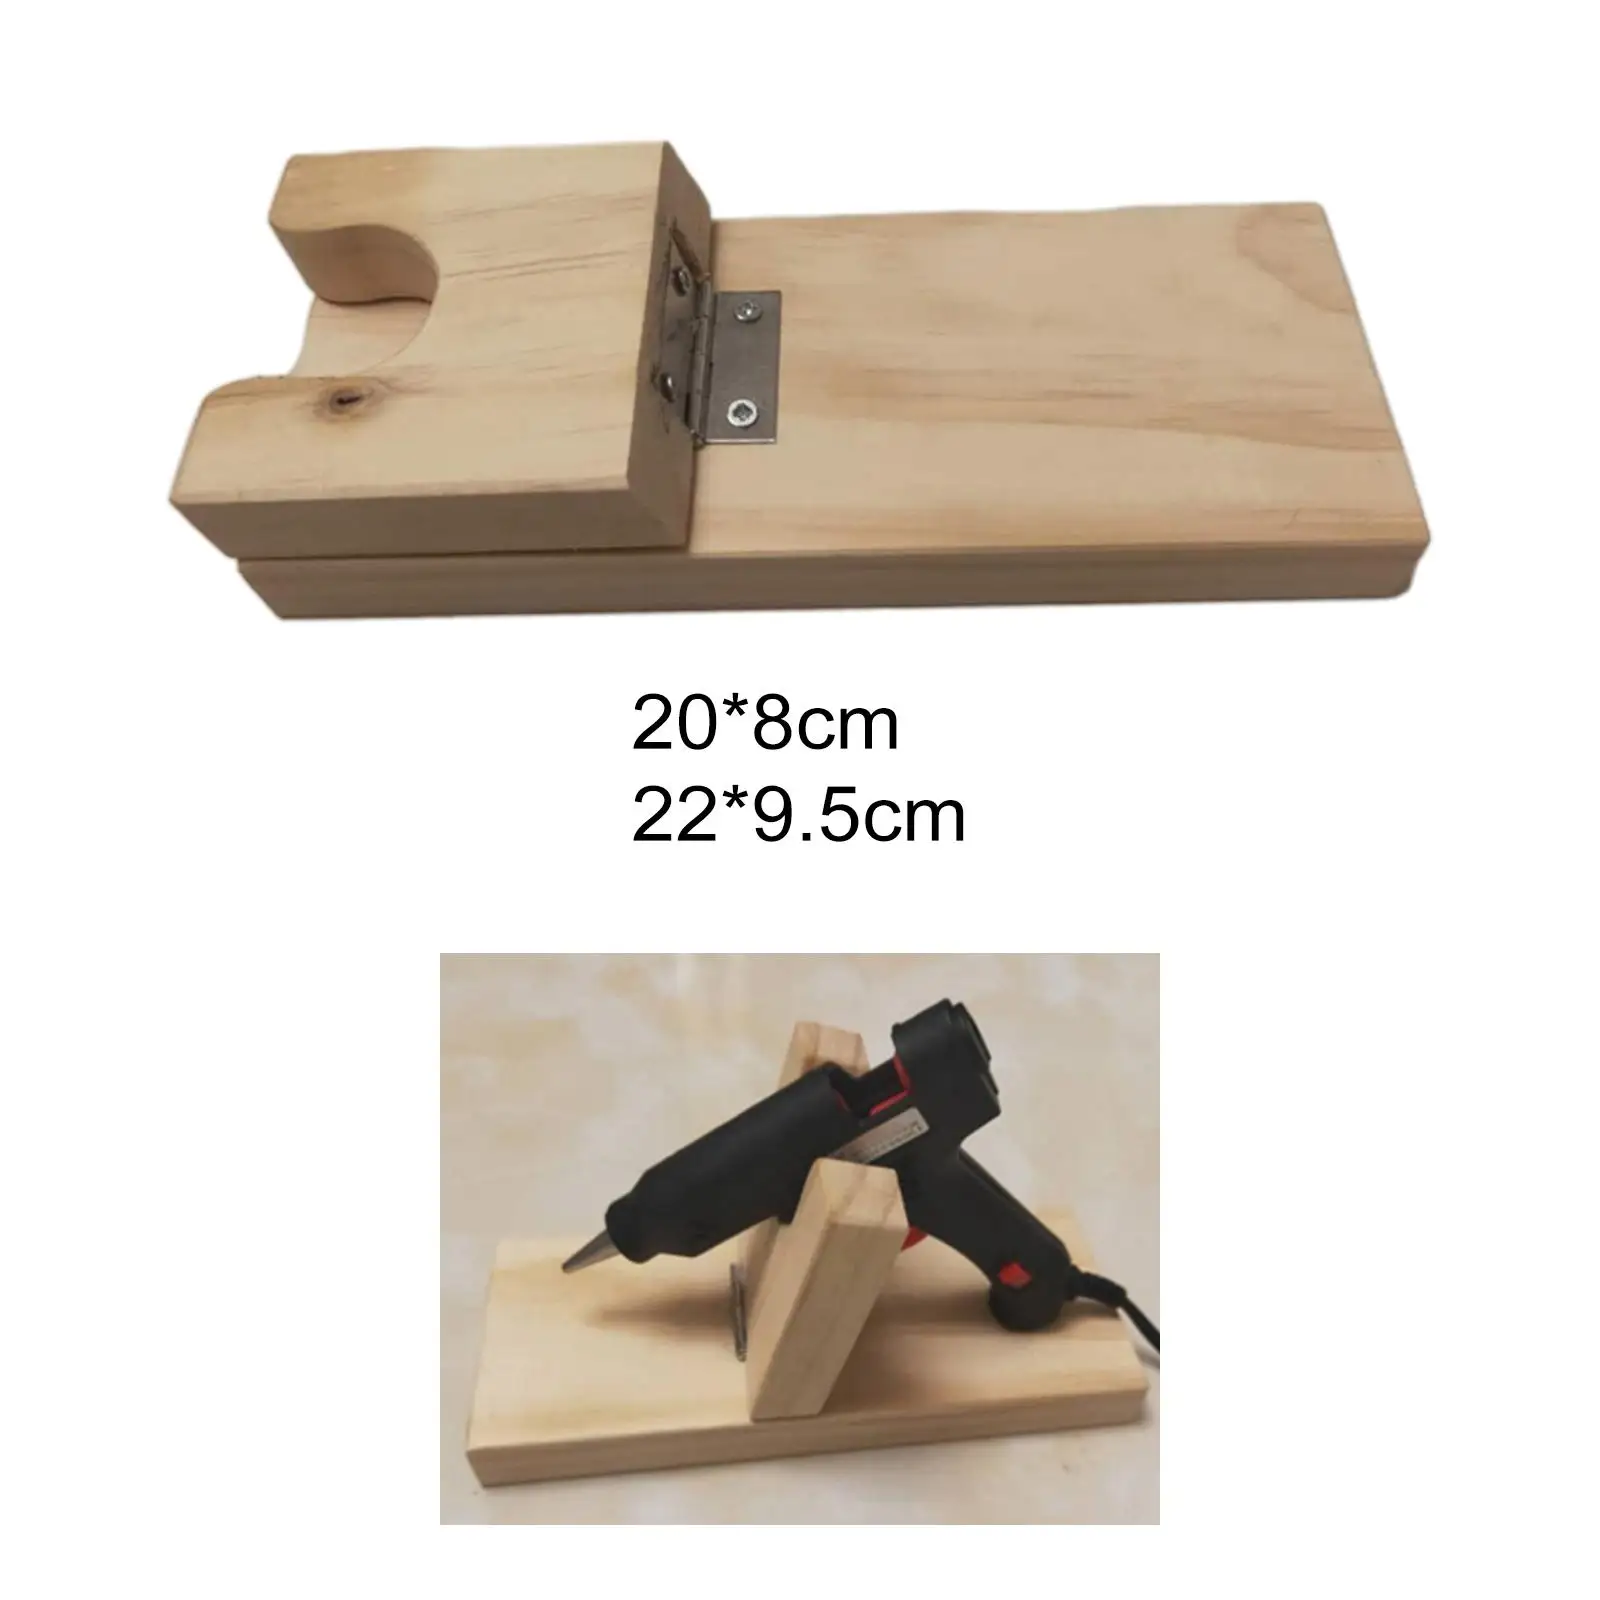 Wood Hot Glue Stand Hot Melt Glue Support Stand Tools Storage Holder Bracket